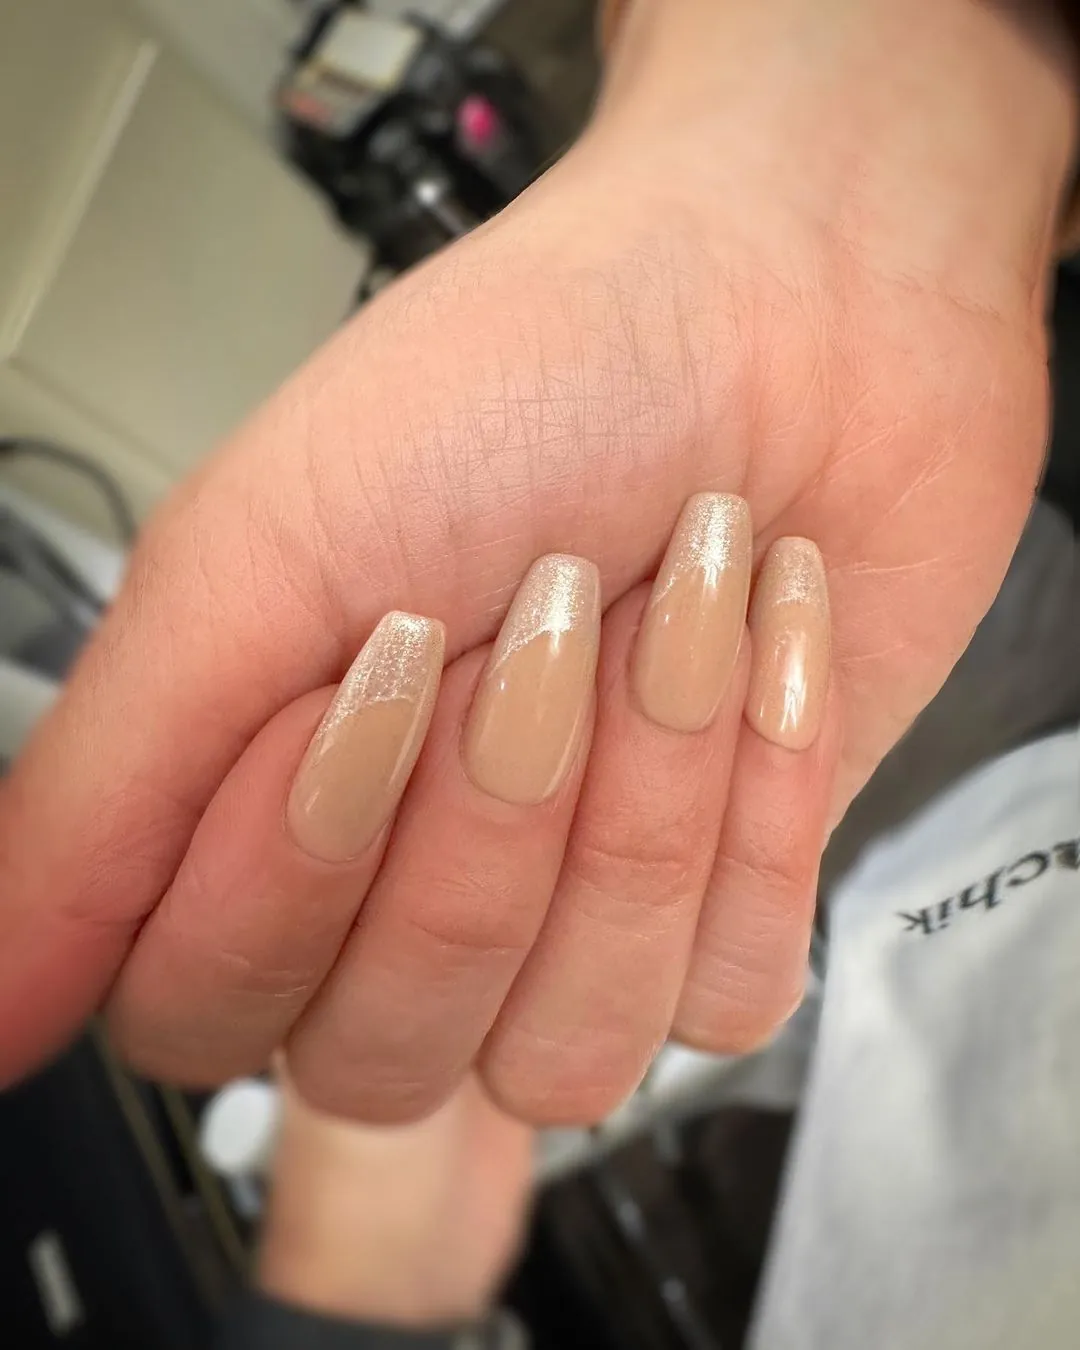 J. Lo's glittery French manicure